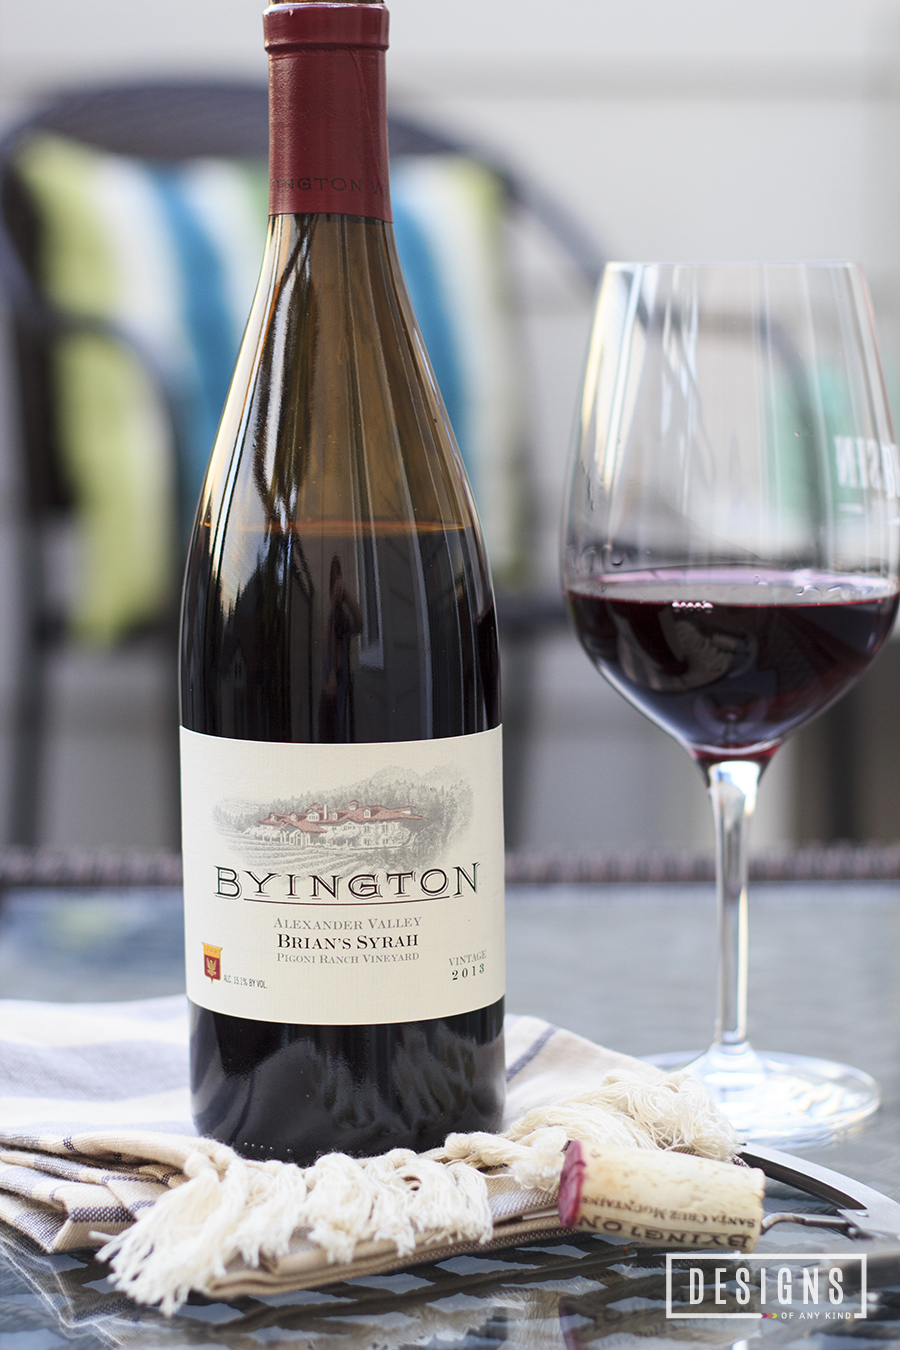 Just Tasted | Byington Vineyards 2013 Brian's Syrah Pigoni Ranch Vineyard